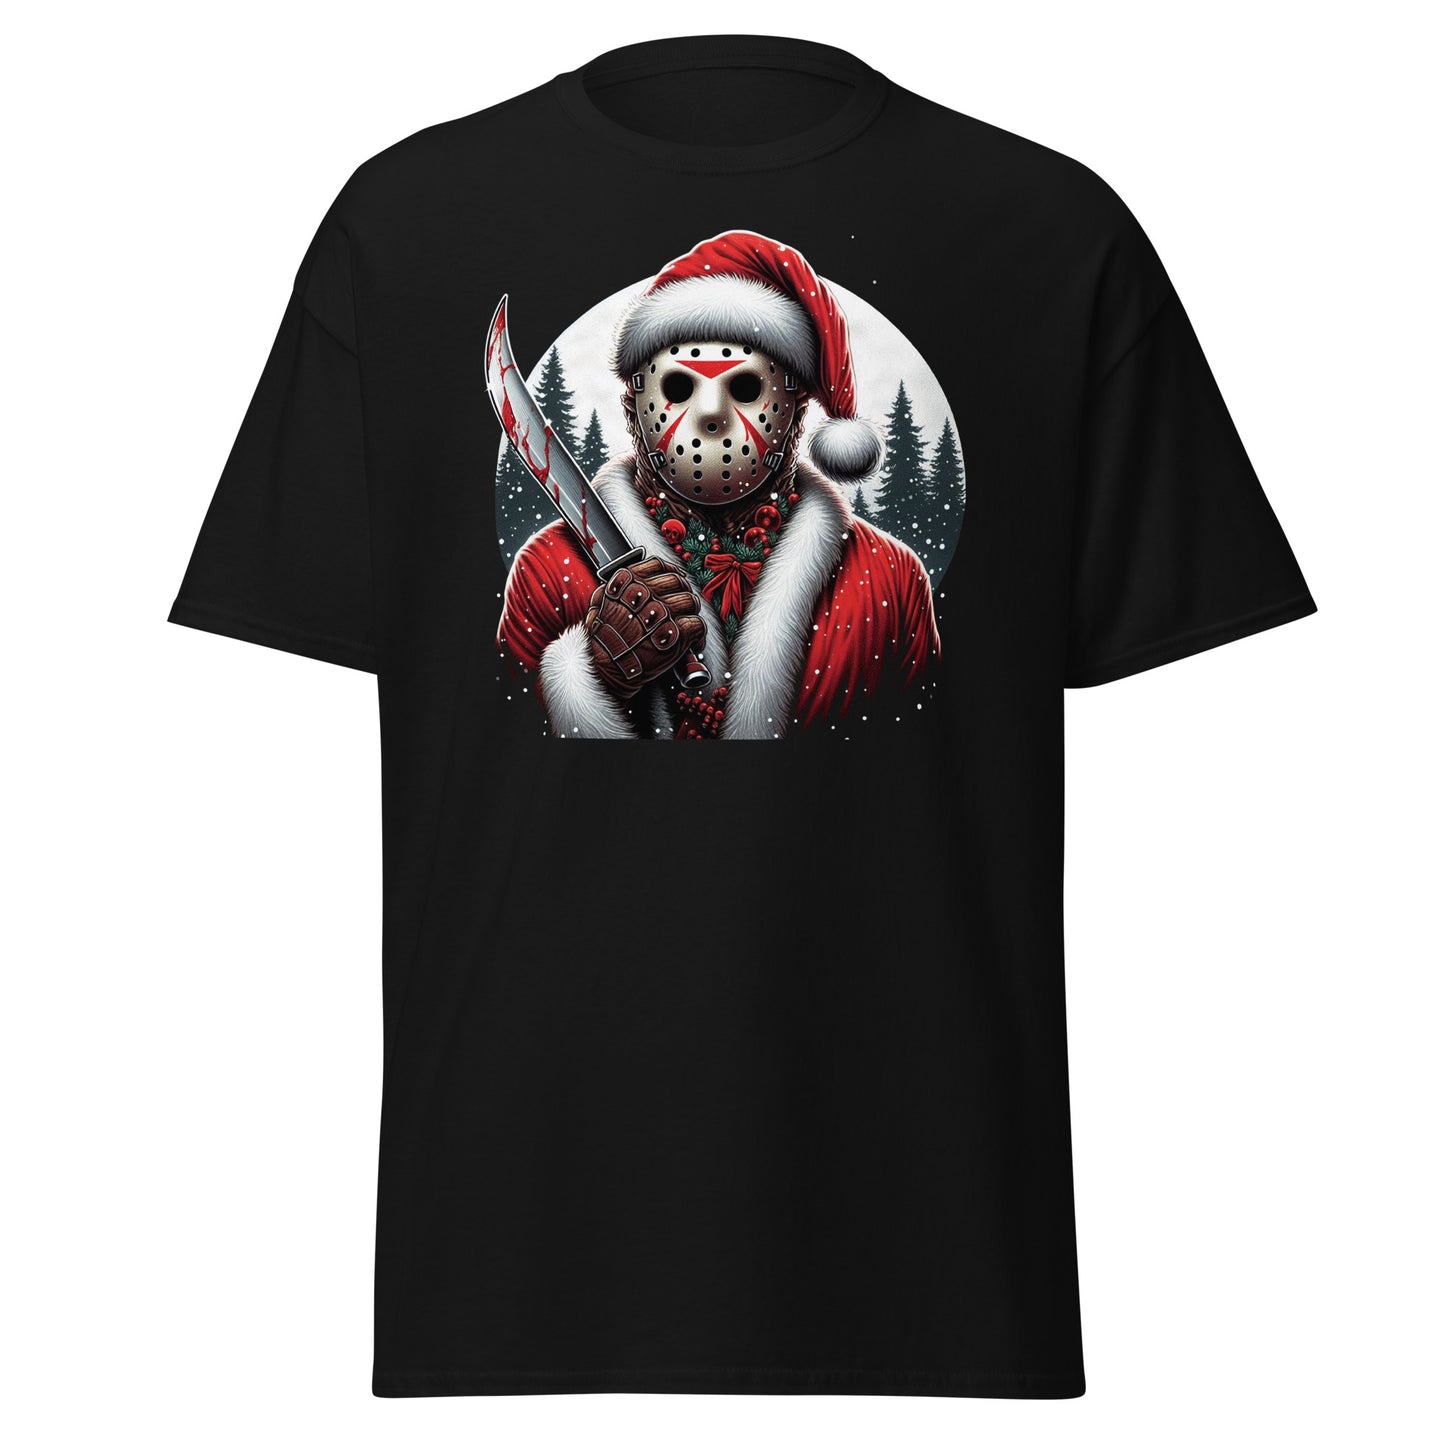 Jason Voorhees Santa T-Shirt - A Horror Twist to Holiday Cheer